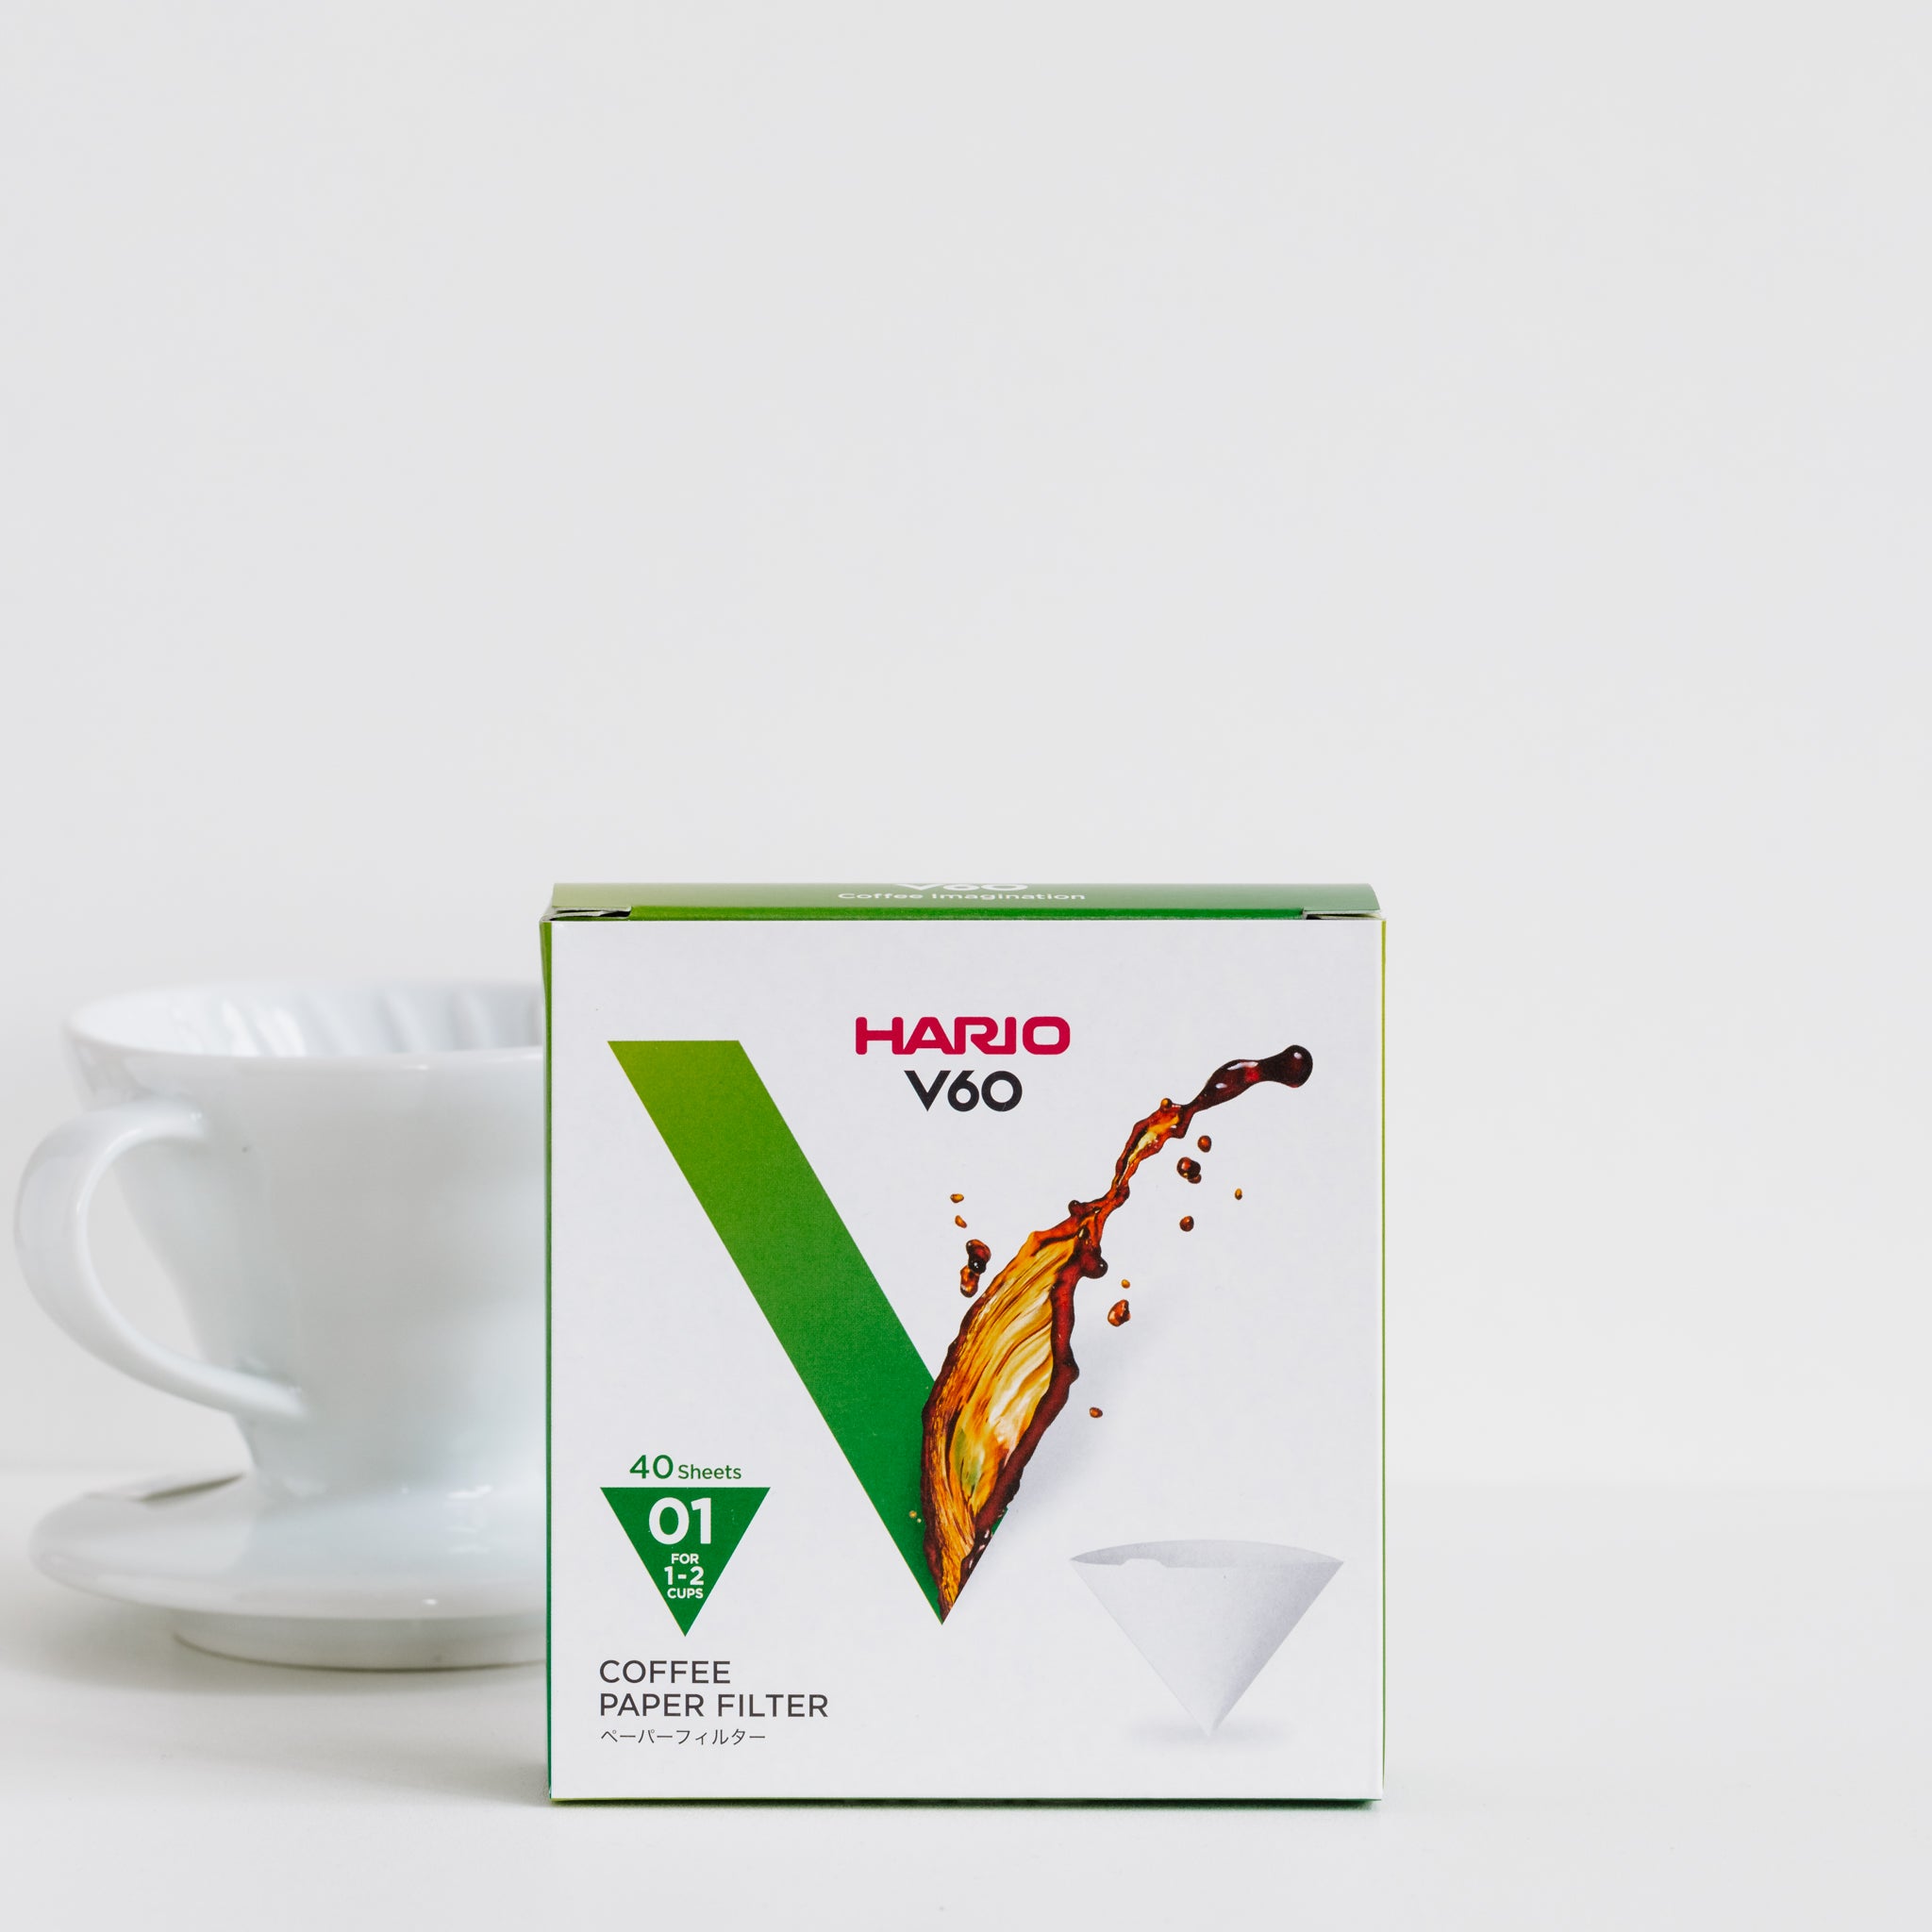 Hario V60 filter paper box on white background